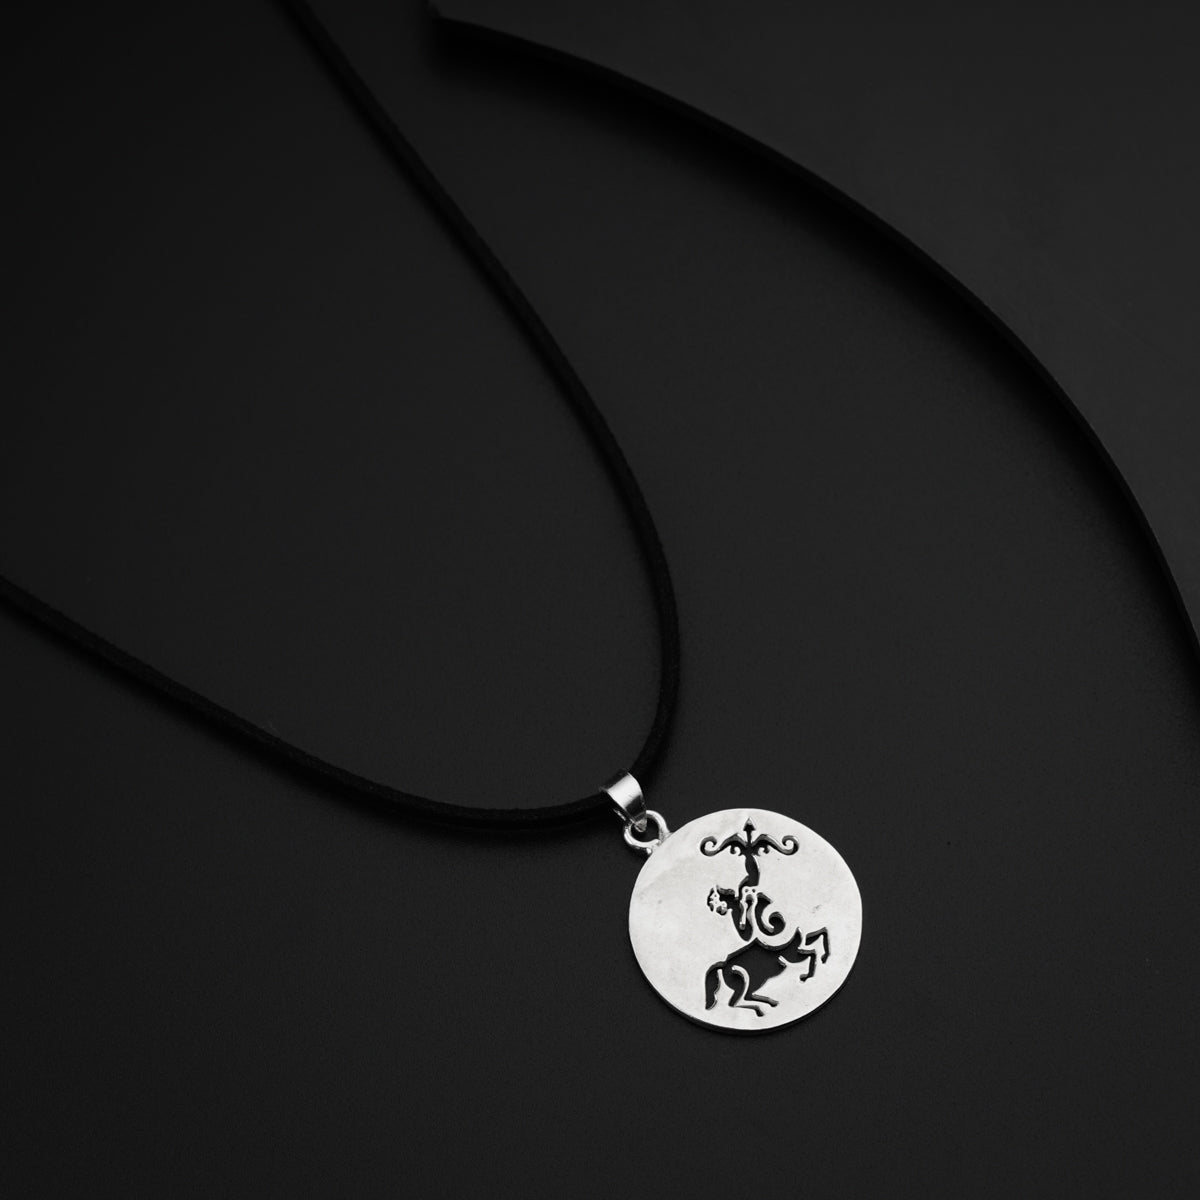 Sagittarius / धनु Silver Pendant Necklace